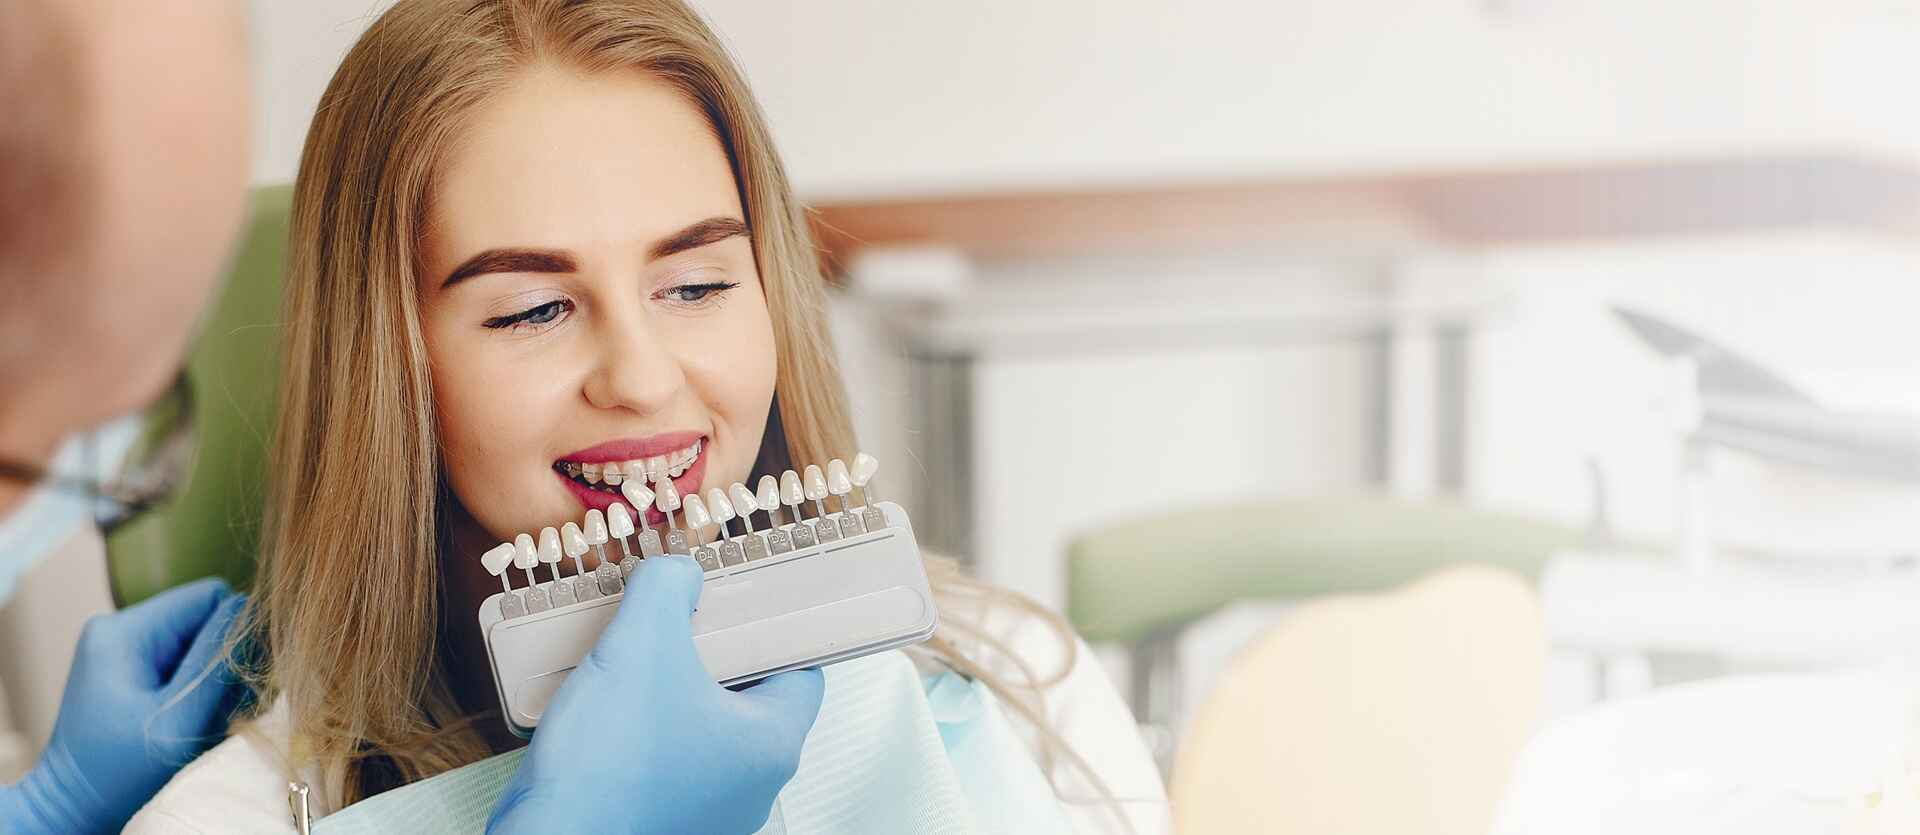 Cosmetic Dentistry in Memorial - GB Dentistry